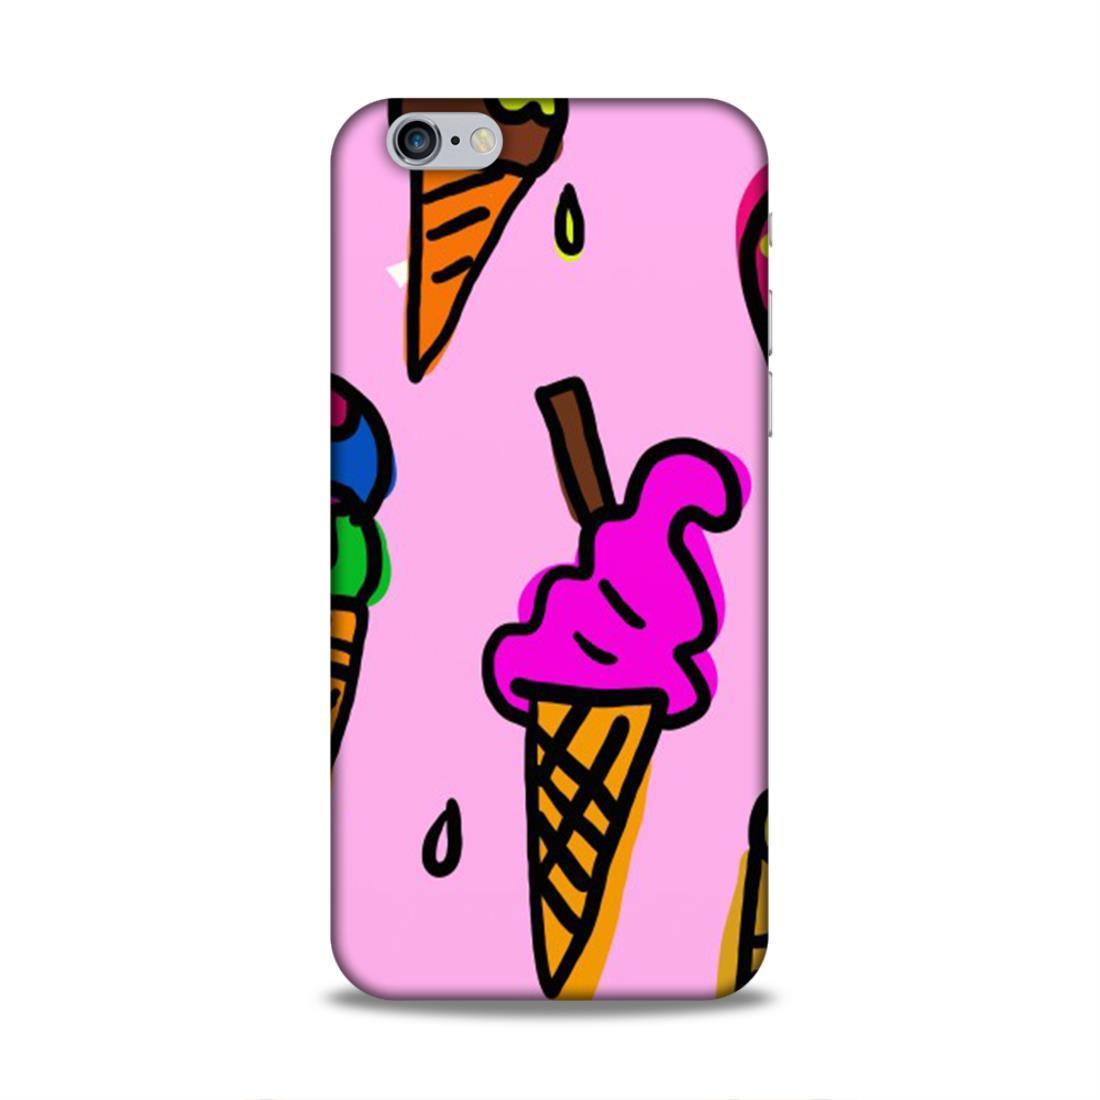 Icecream Pink iPhone 6 Phone Cover